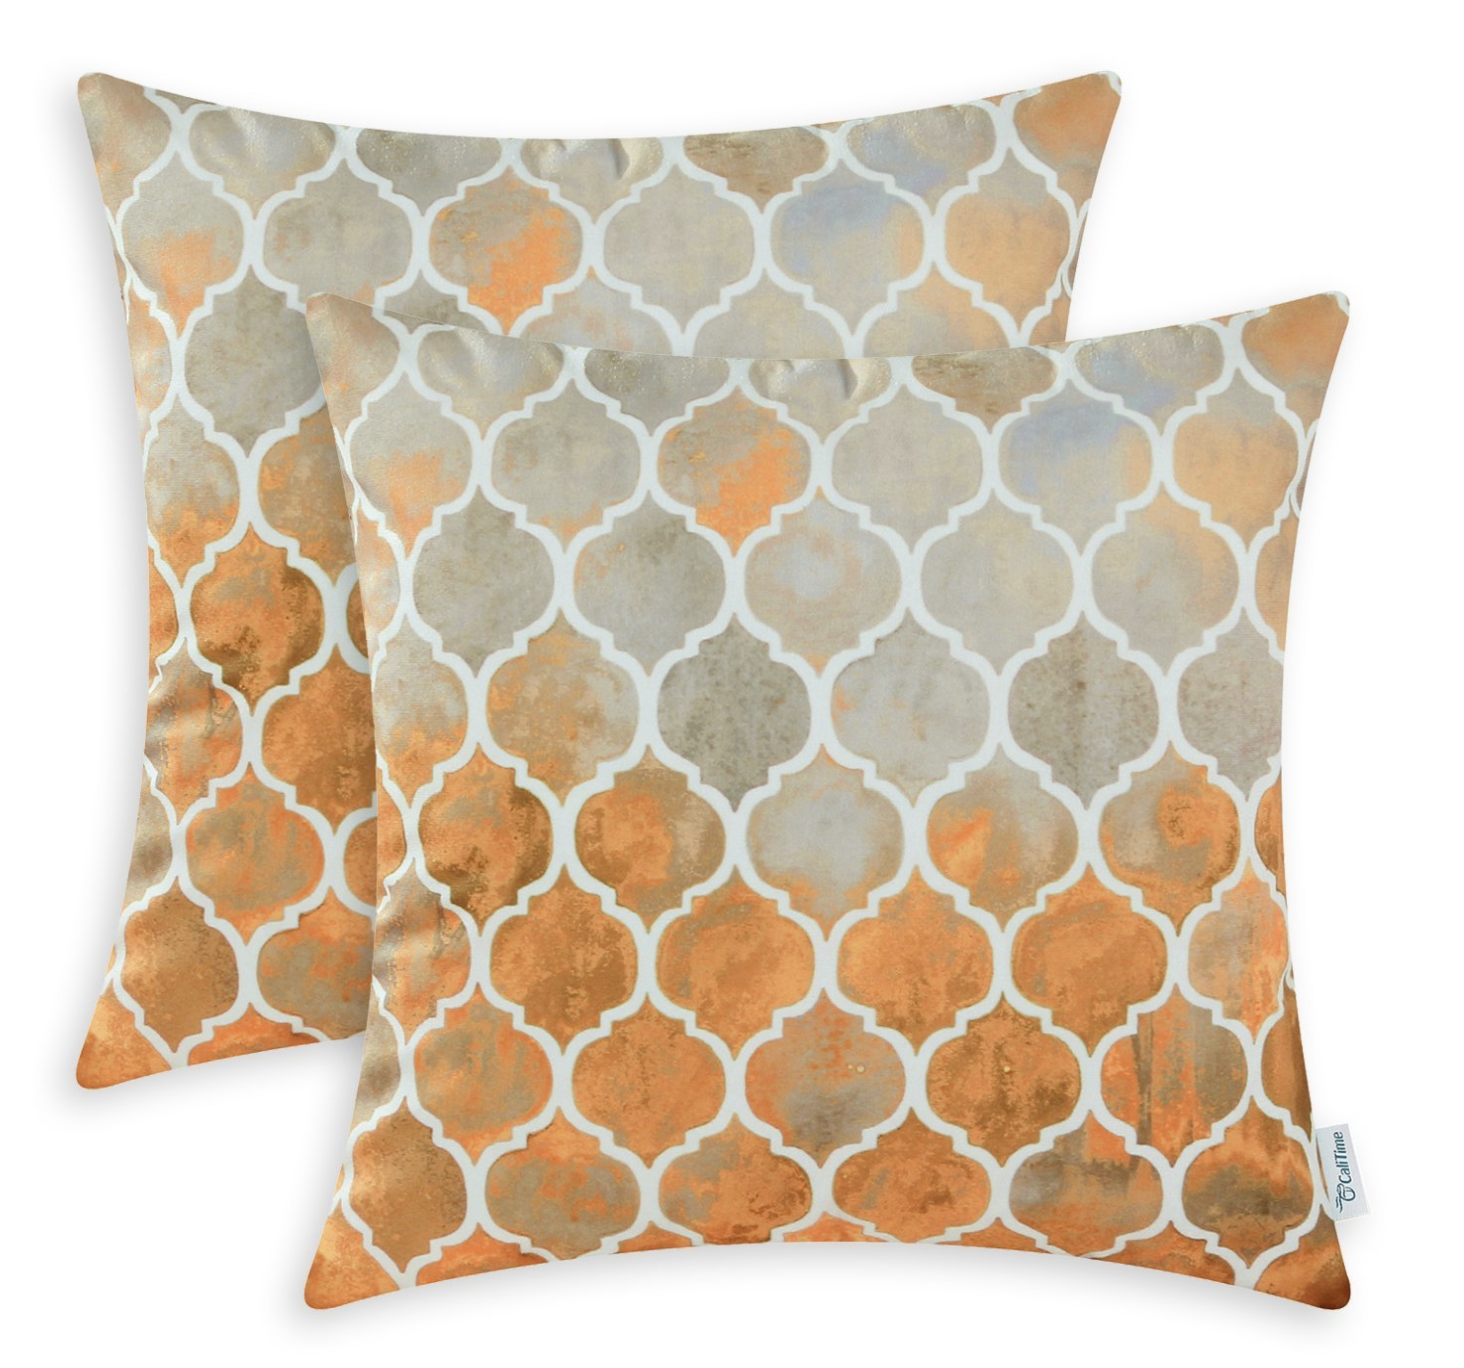 Trellis Pillows in Orange